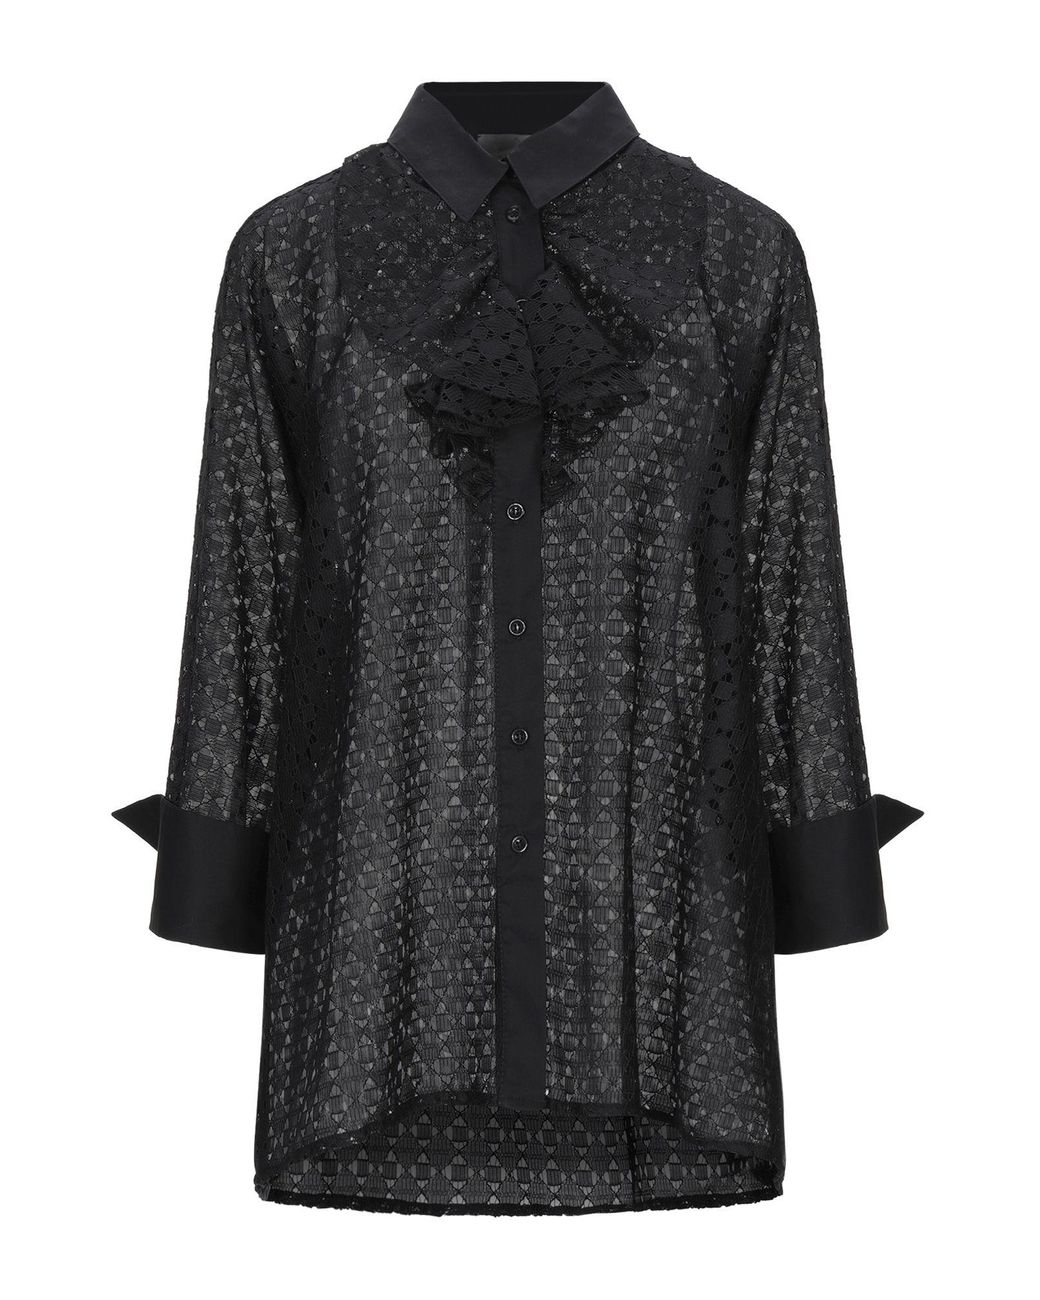 Roberta Scarpa Lace Shirt in Black - Lyst